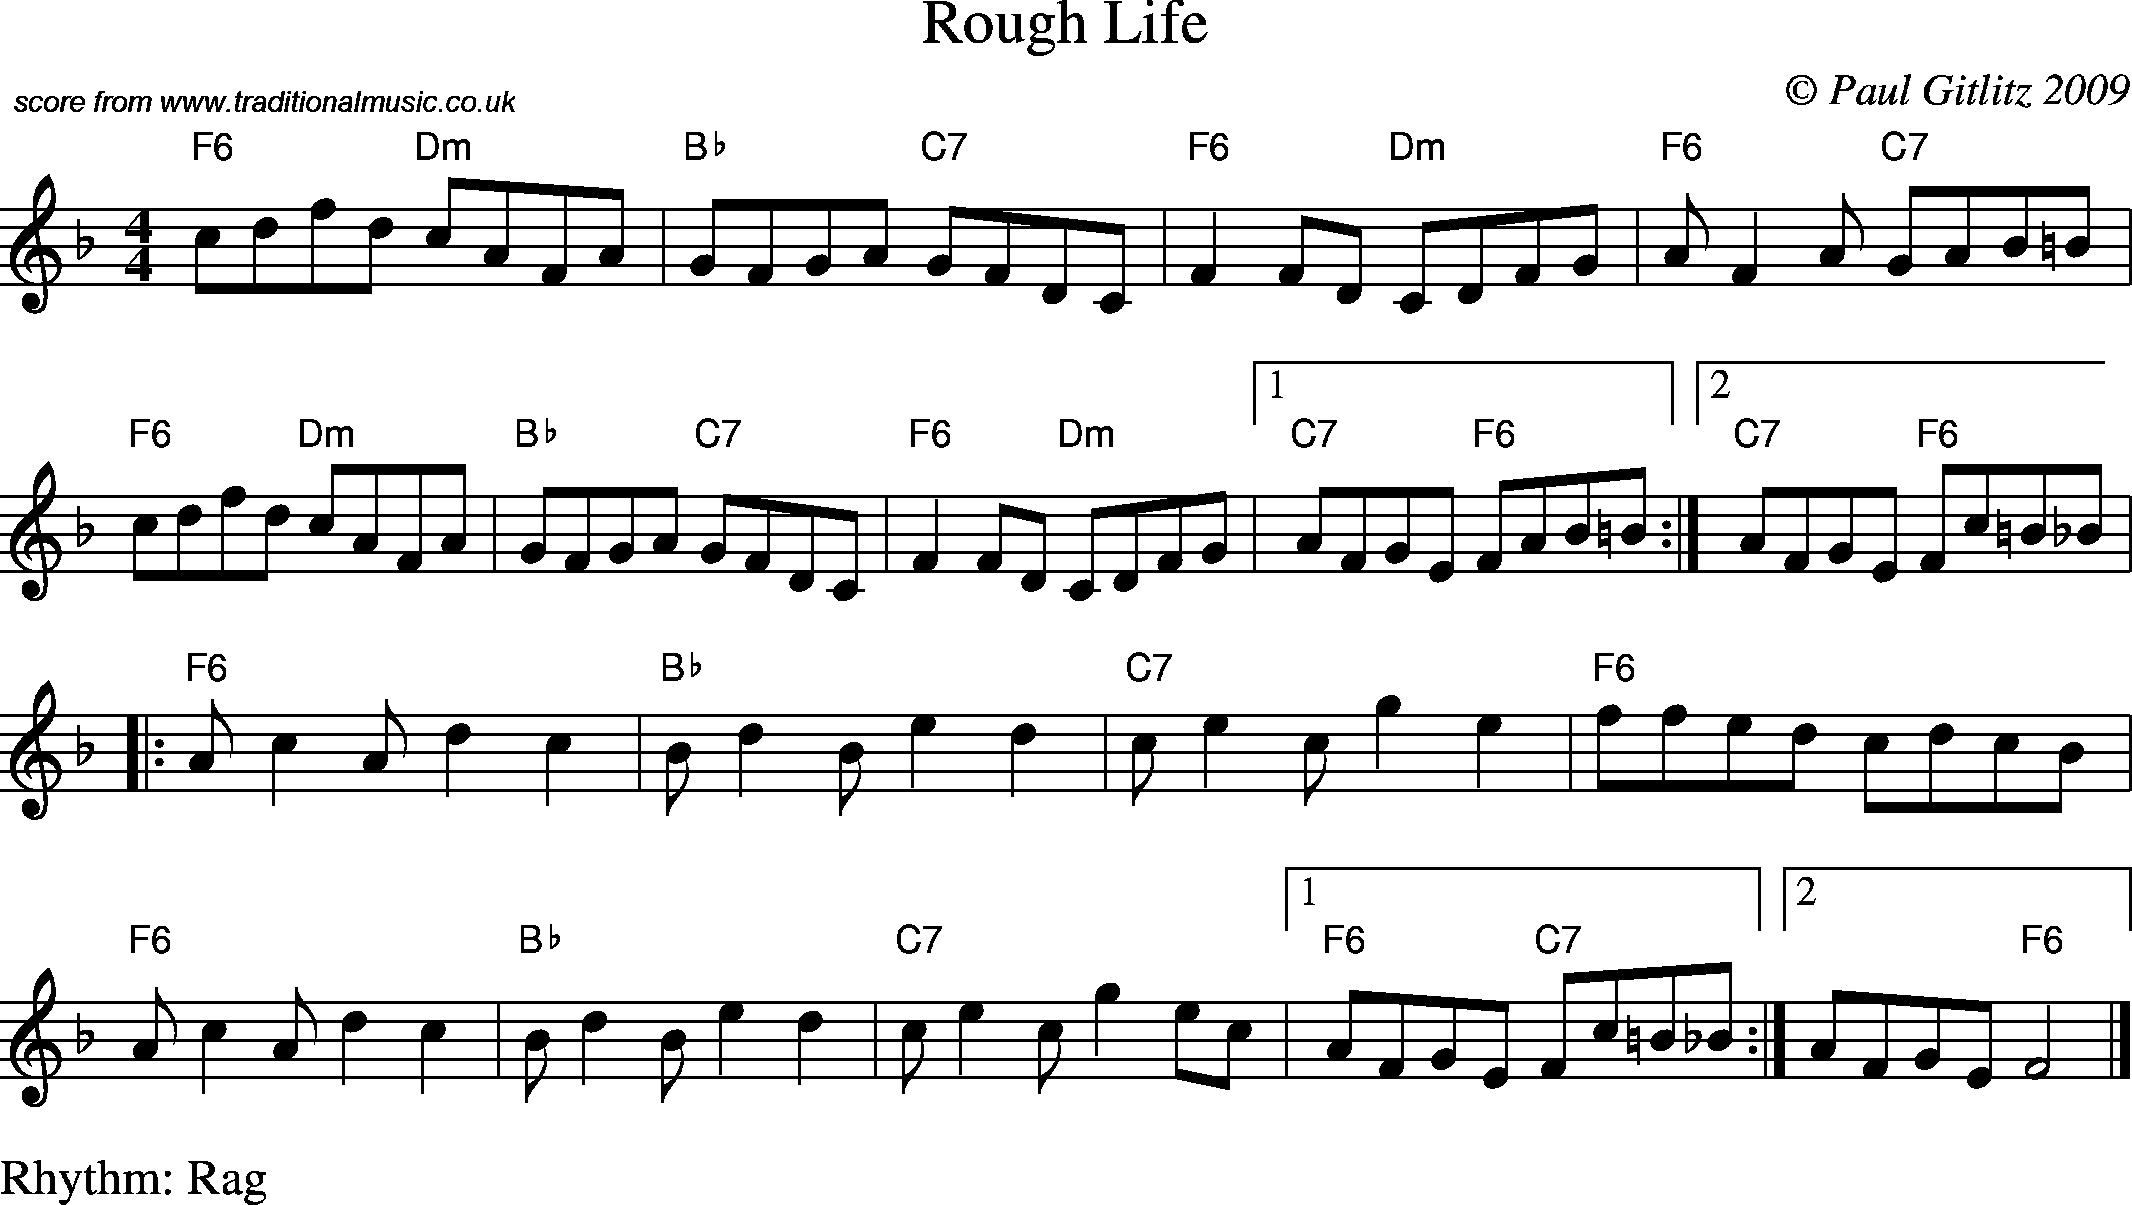 Sheet Music Score for Reel - Rough Life